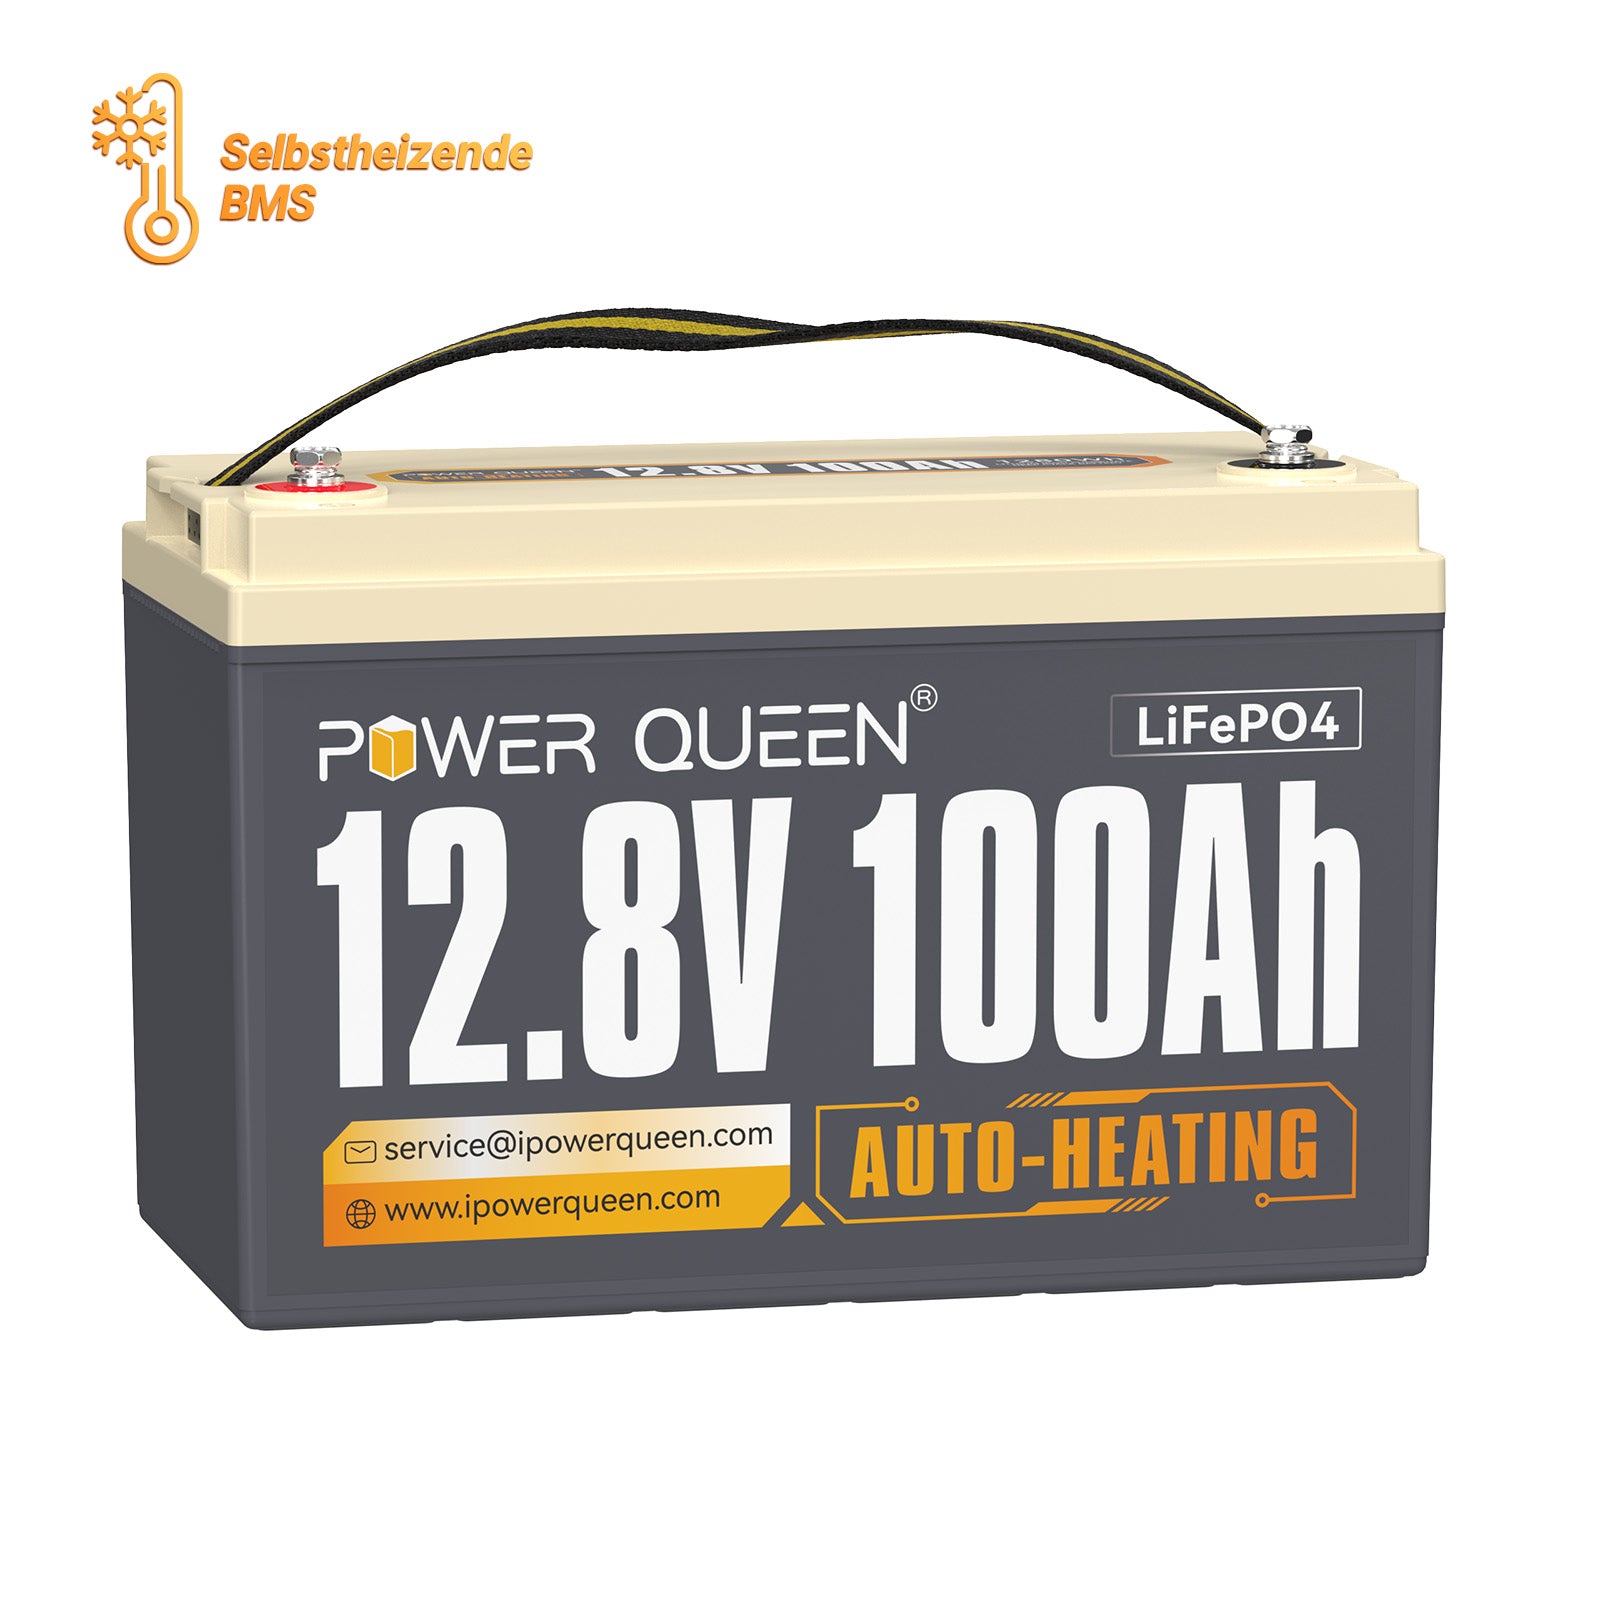 Batterie LiFePO4 auto-chauffante Power Queen 12 V (12,8 V) 100 Ah